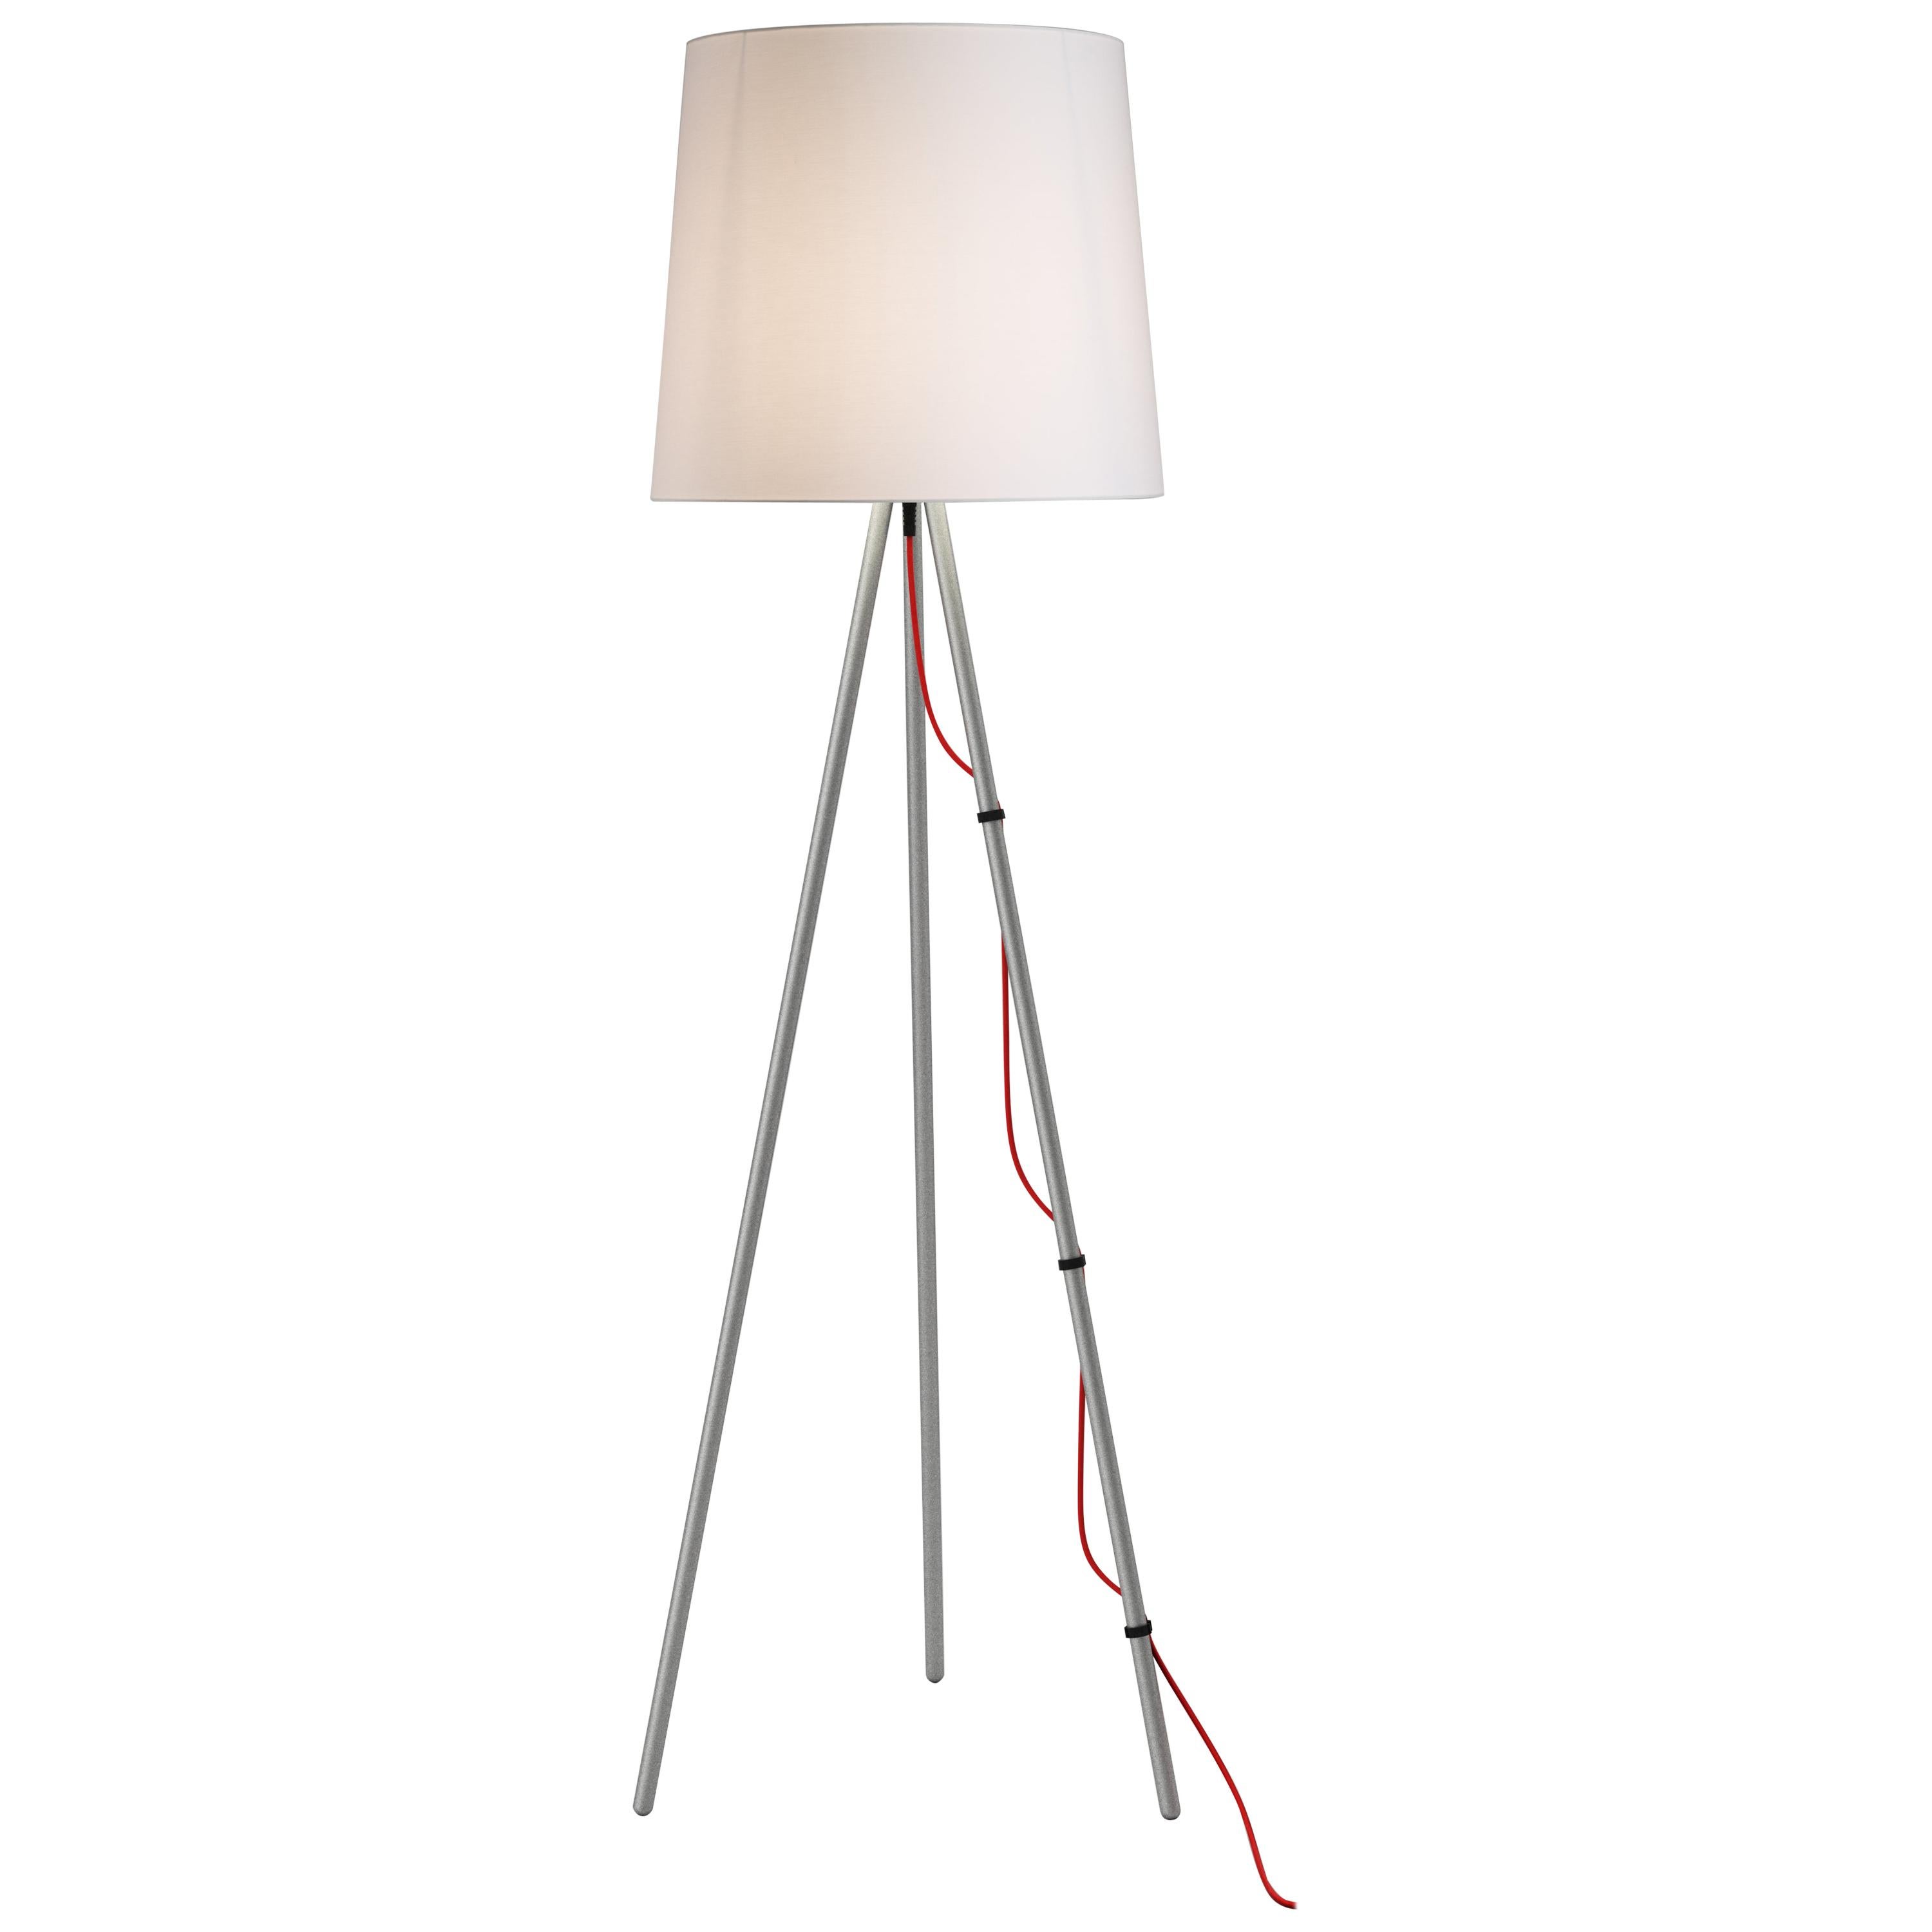 For Sale: White Martinelli Luce Eva 2270 Floor Lamp in Satin Aluminum Body